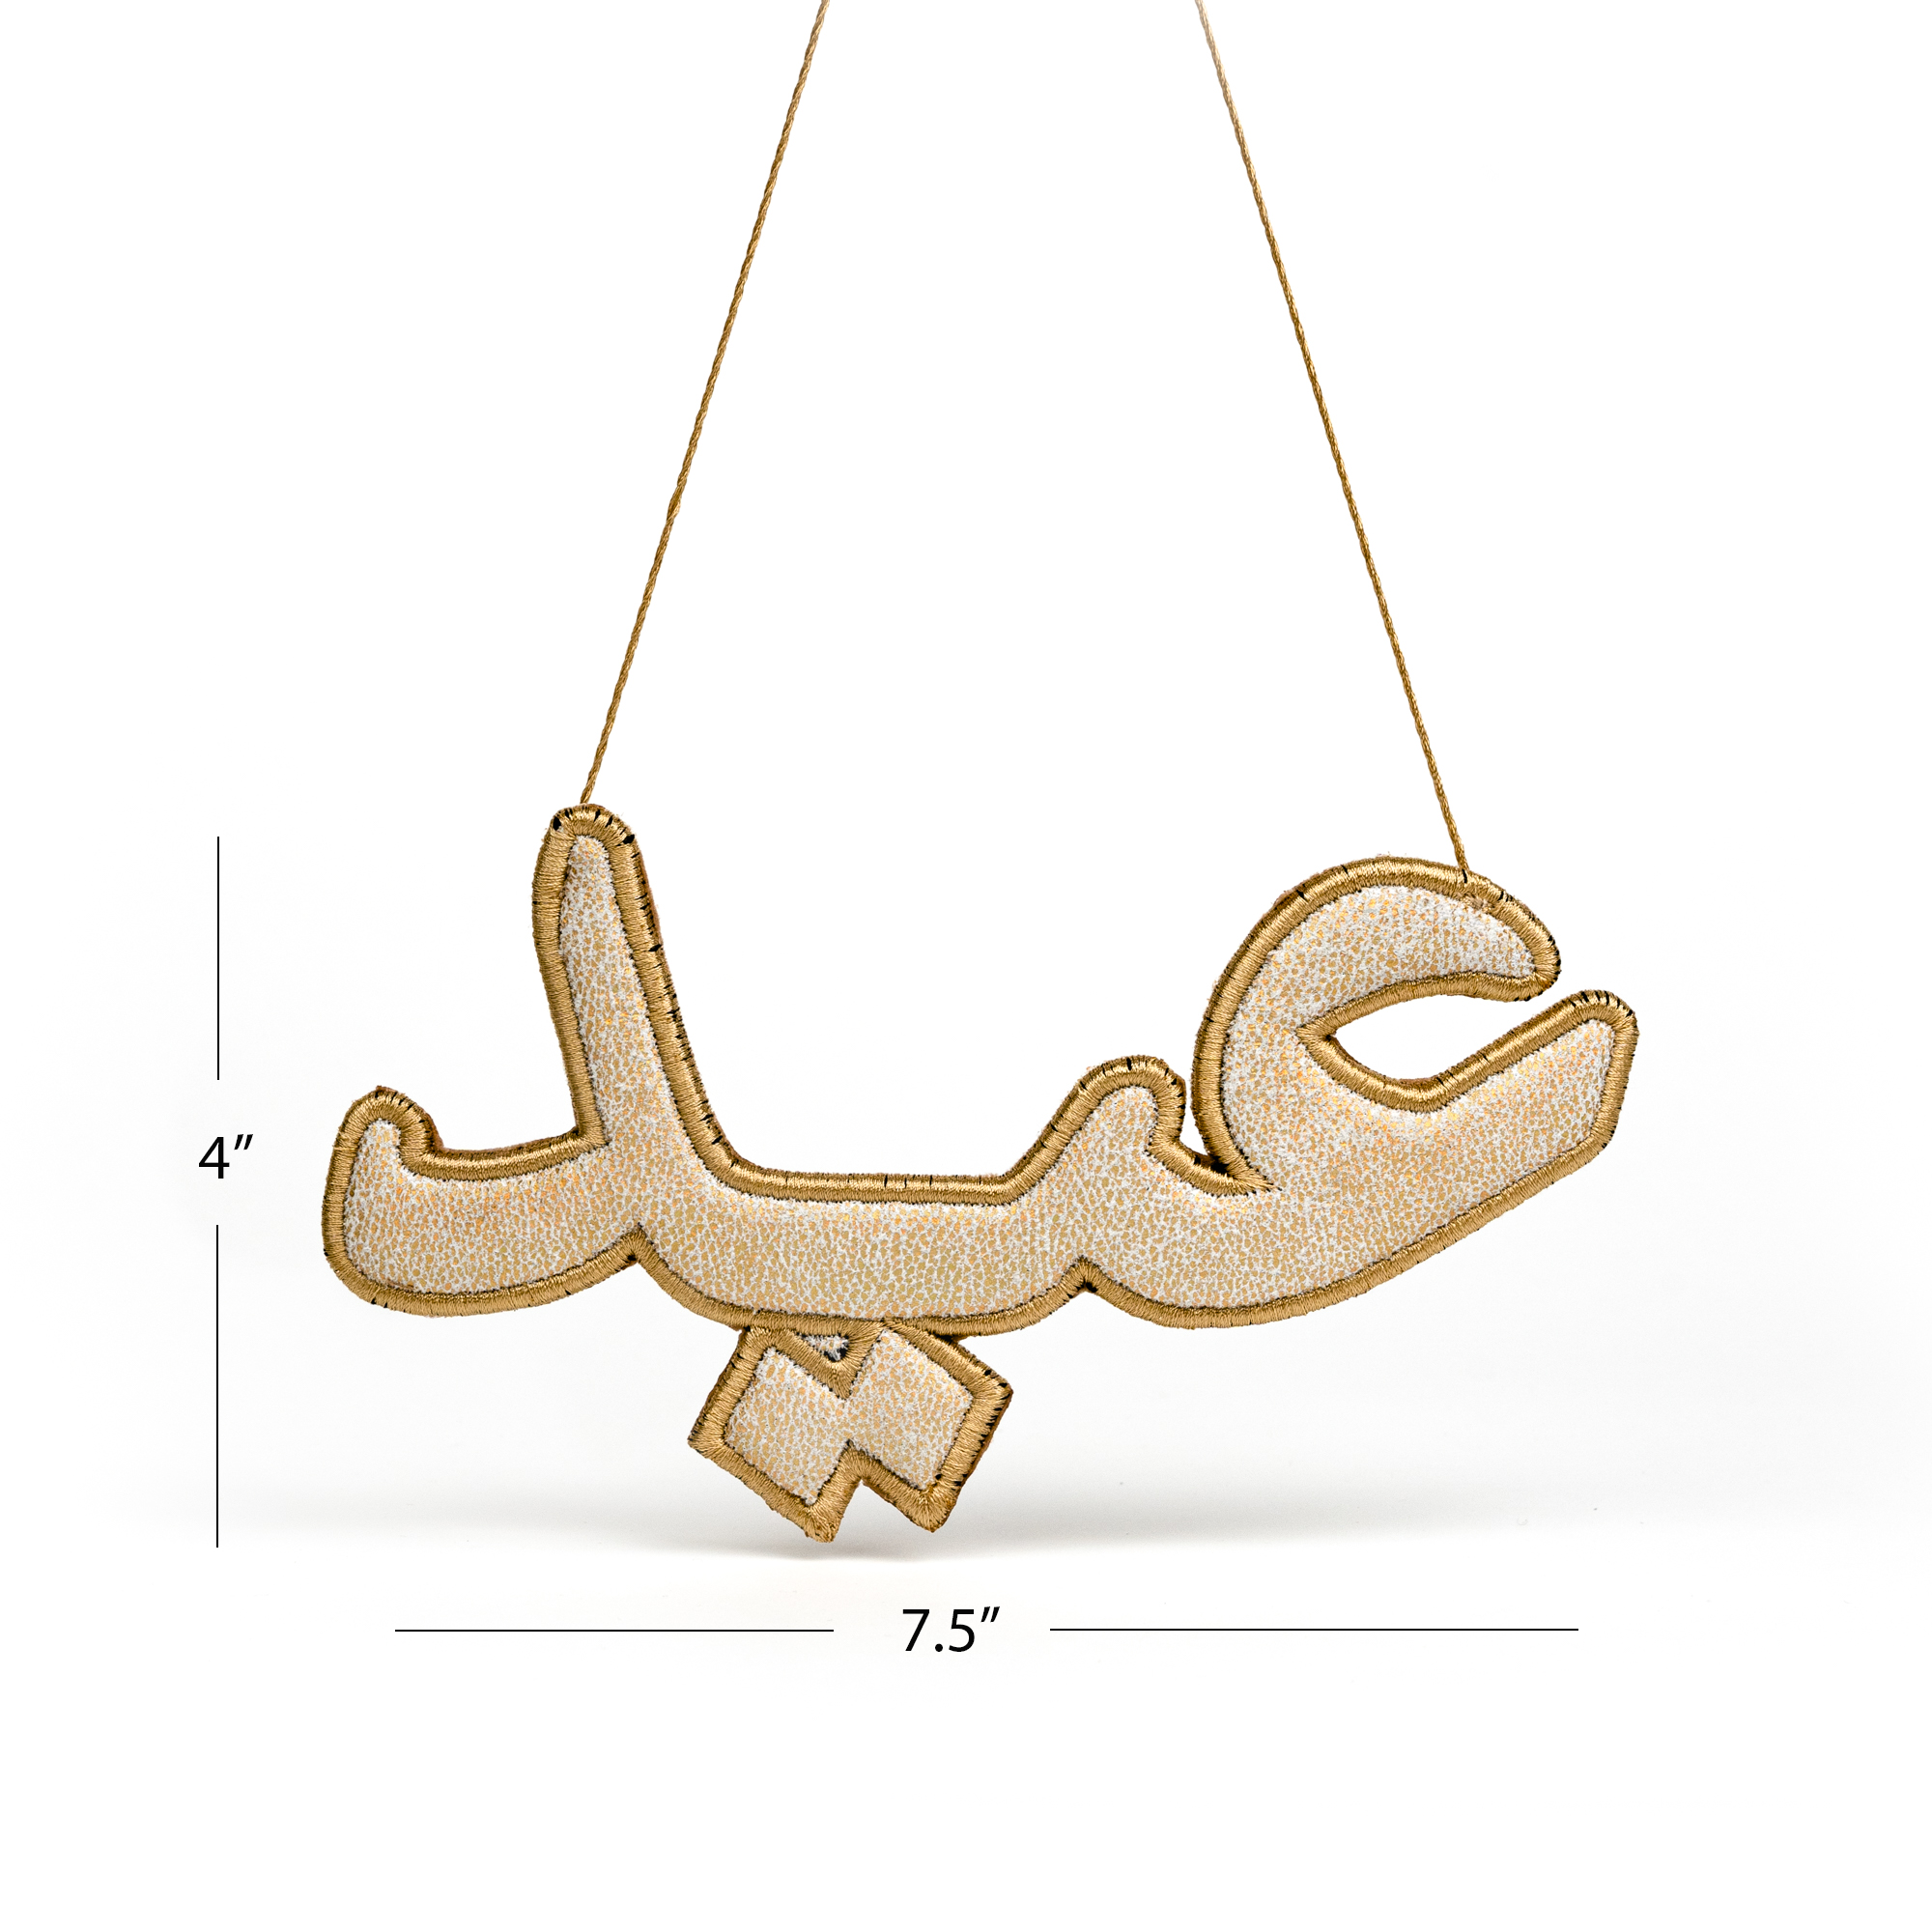 "عيد" Eid Golden Arabic Calligraphy Embroidery Ornament with dimension